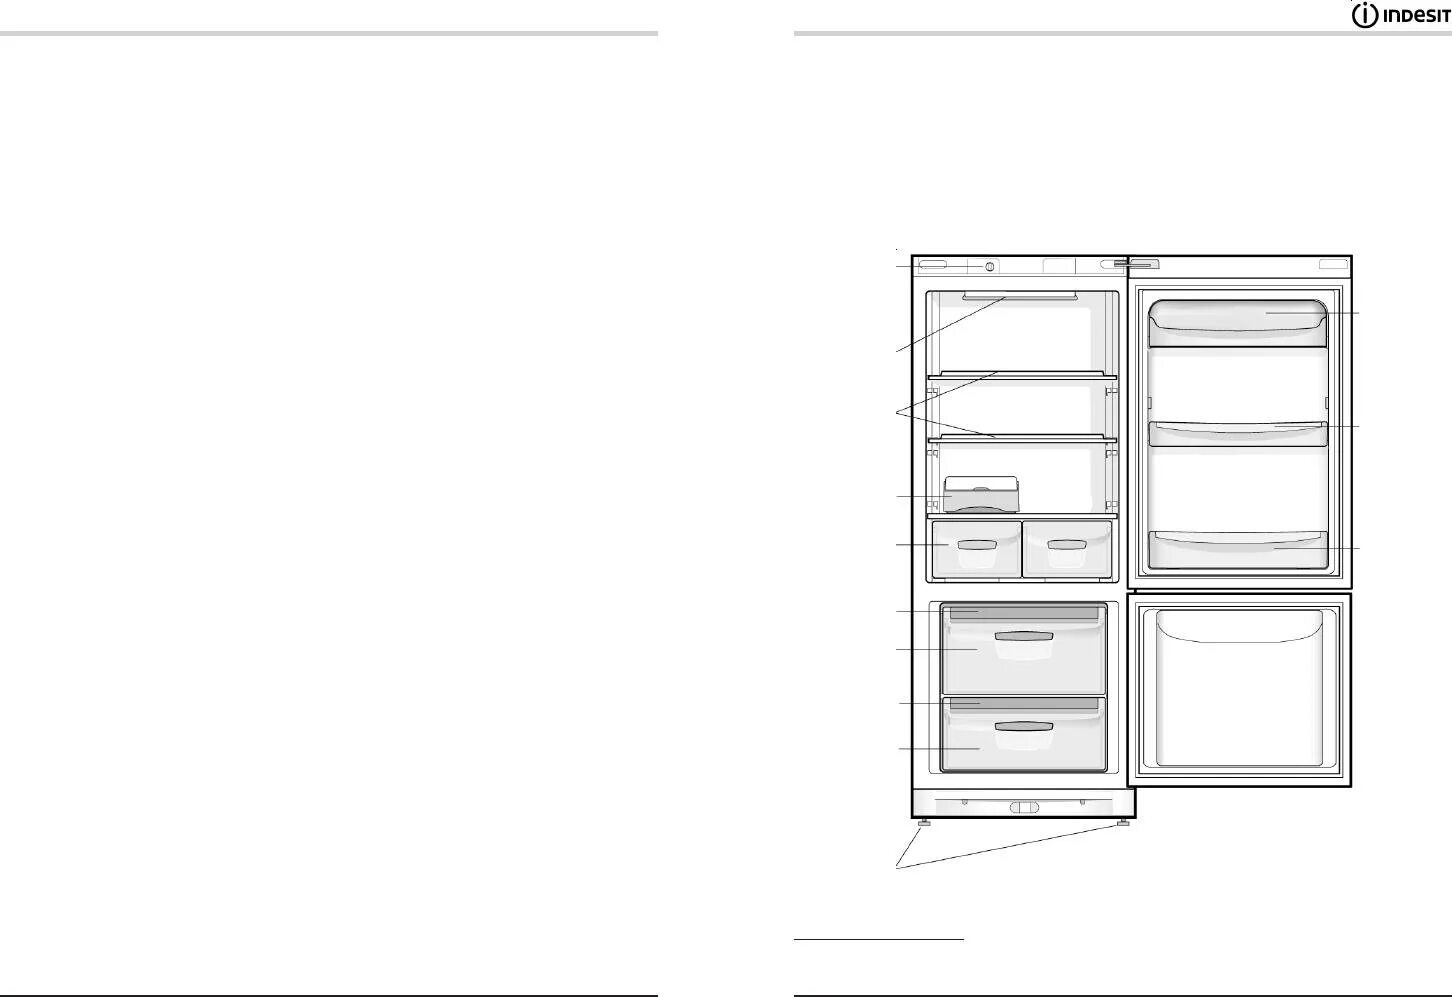 Бан 13. Холодильник Индезит-форма Baan 13 габариты. Индезит Baan 14.